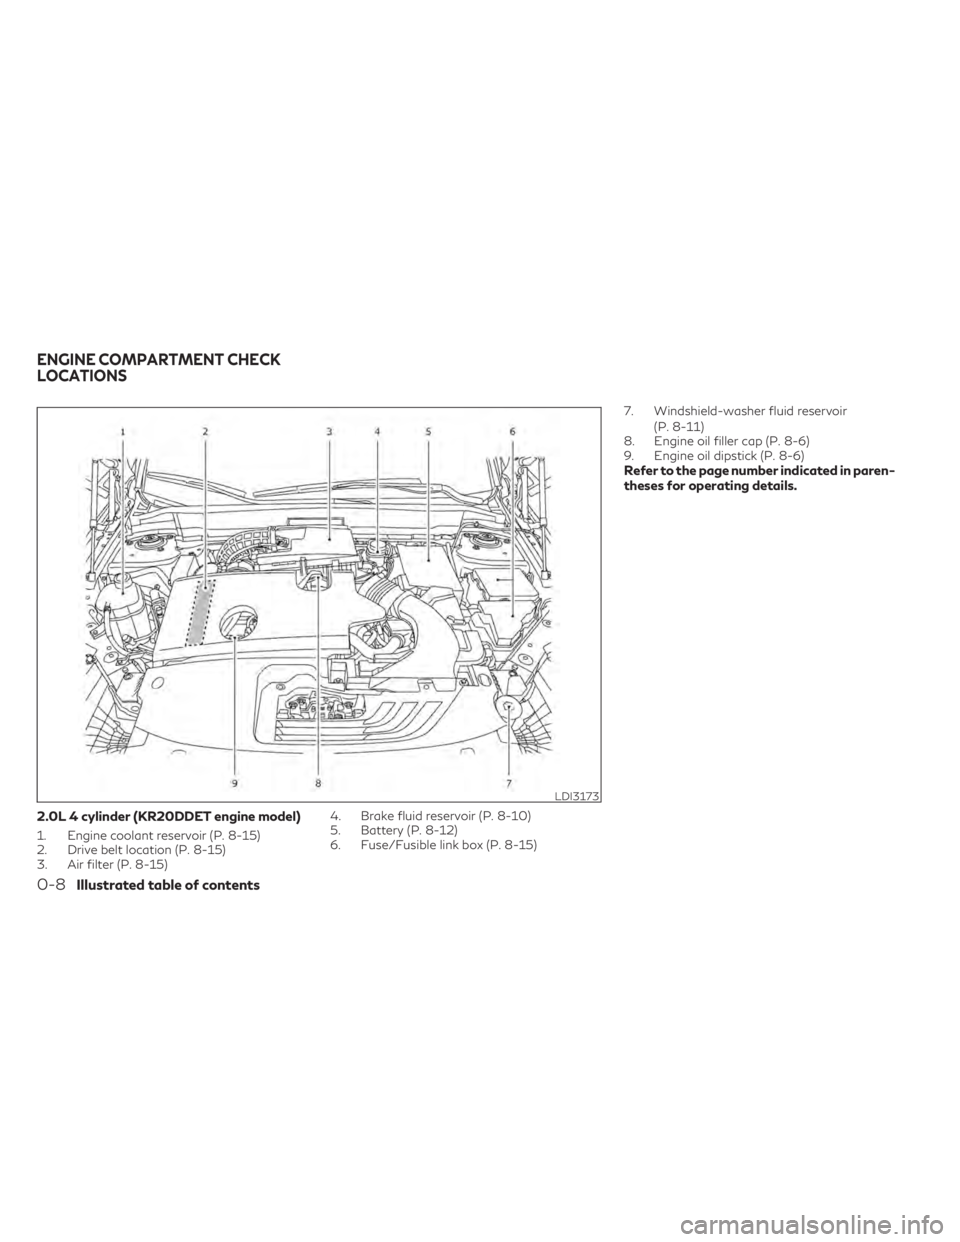 INFINITI QX50 2021  Owners Manual 2.0L 4 cylinder (KR20DDET engine model)
1. Engine coolant reservoir (P. 8-15)
2. Drive belt location (P. 8-15)
3. Air filter (P. 8-15)4. Brake fluid reservoir (P. 8-10)
5. Battery (P. 8-12)
6. Fuse/Fu